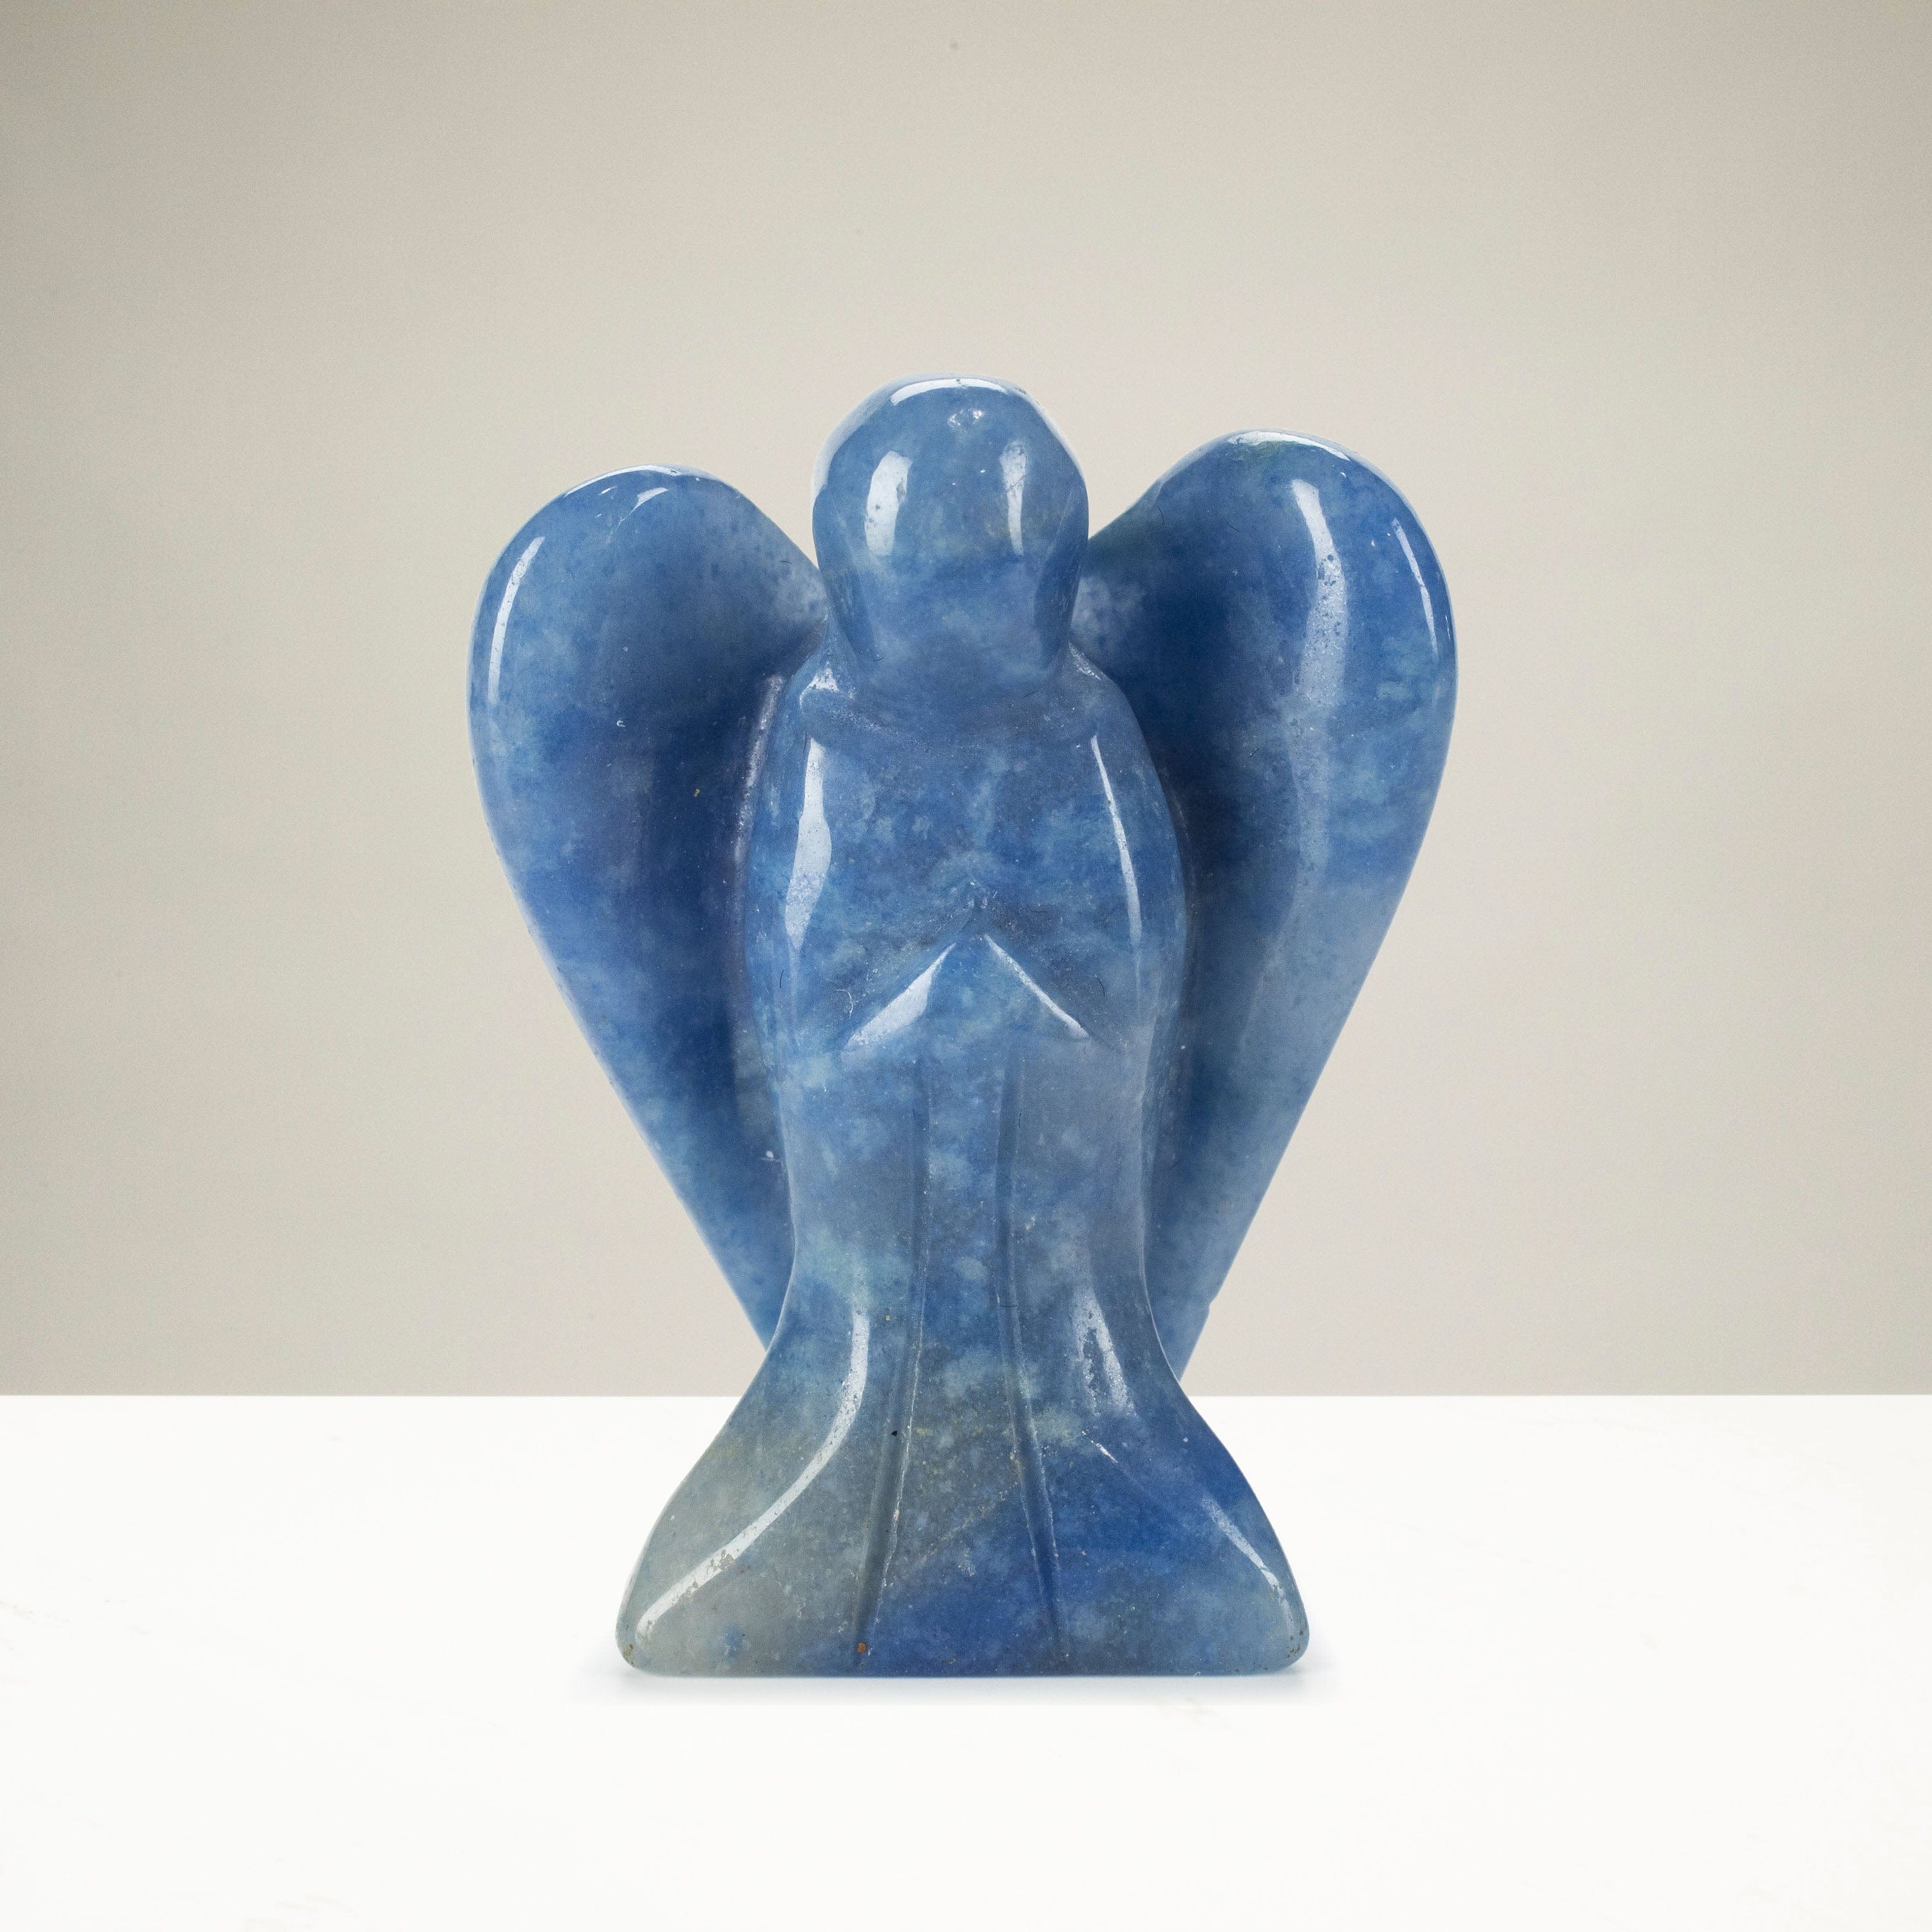 Kalifano Gemstone Carvings Blue Aventurine Angel Small Gemstone Carving CV7-A-BA